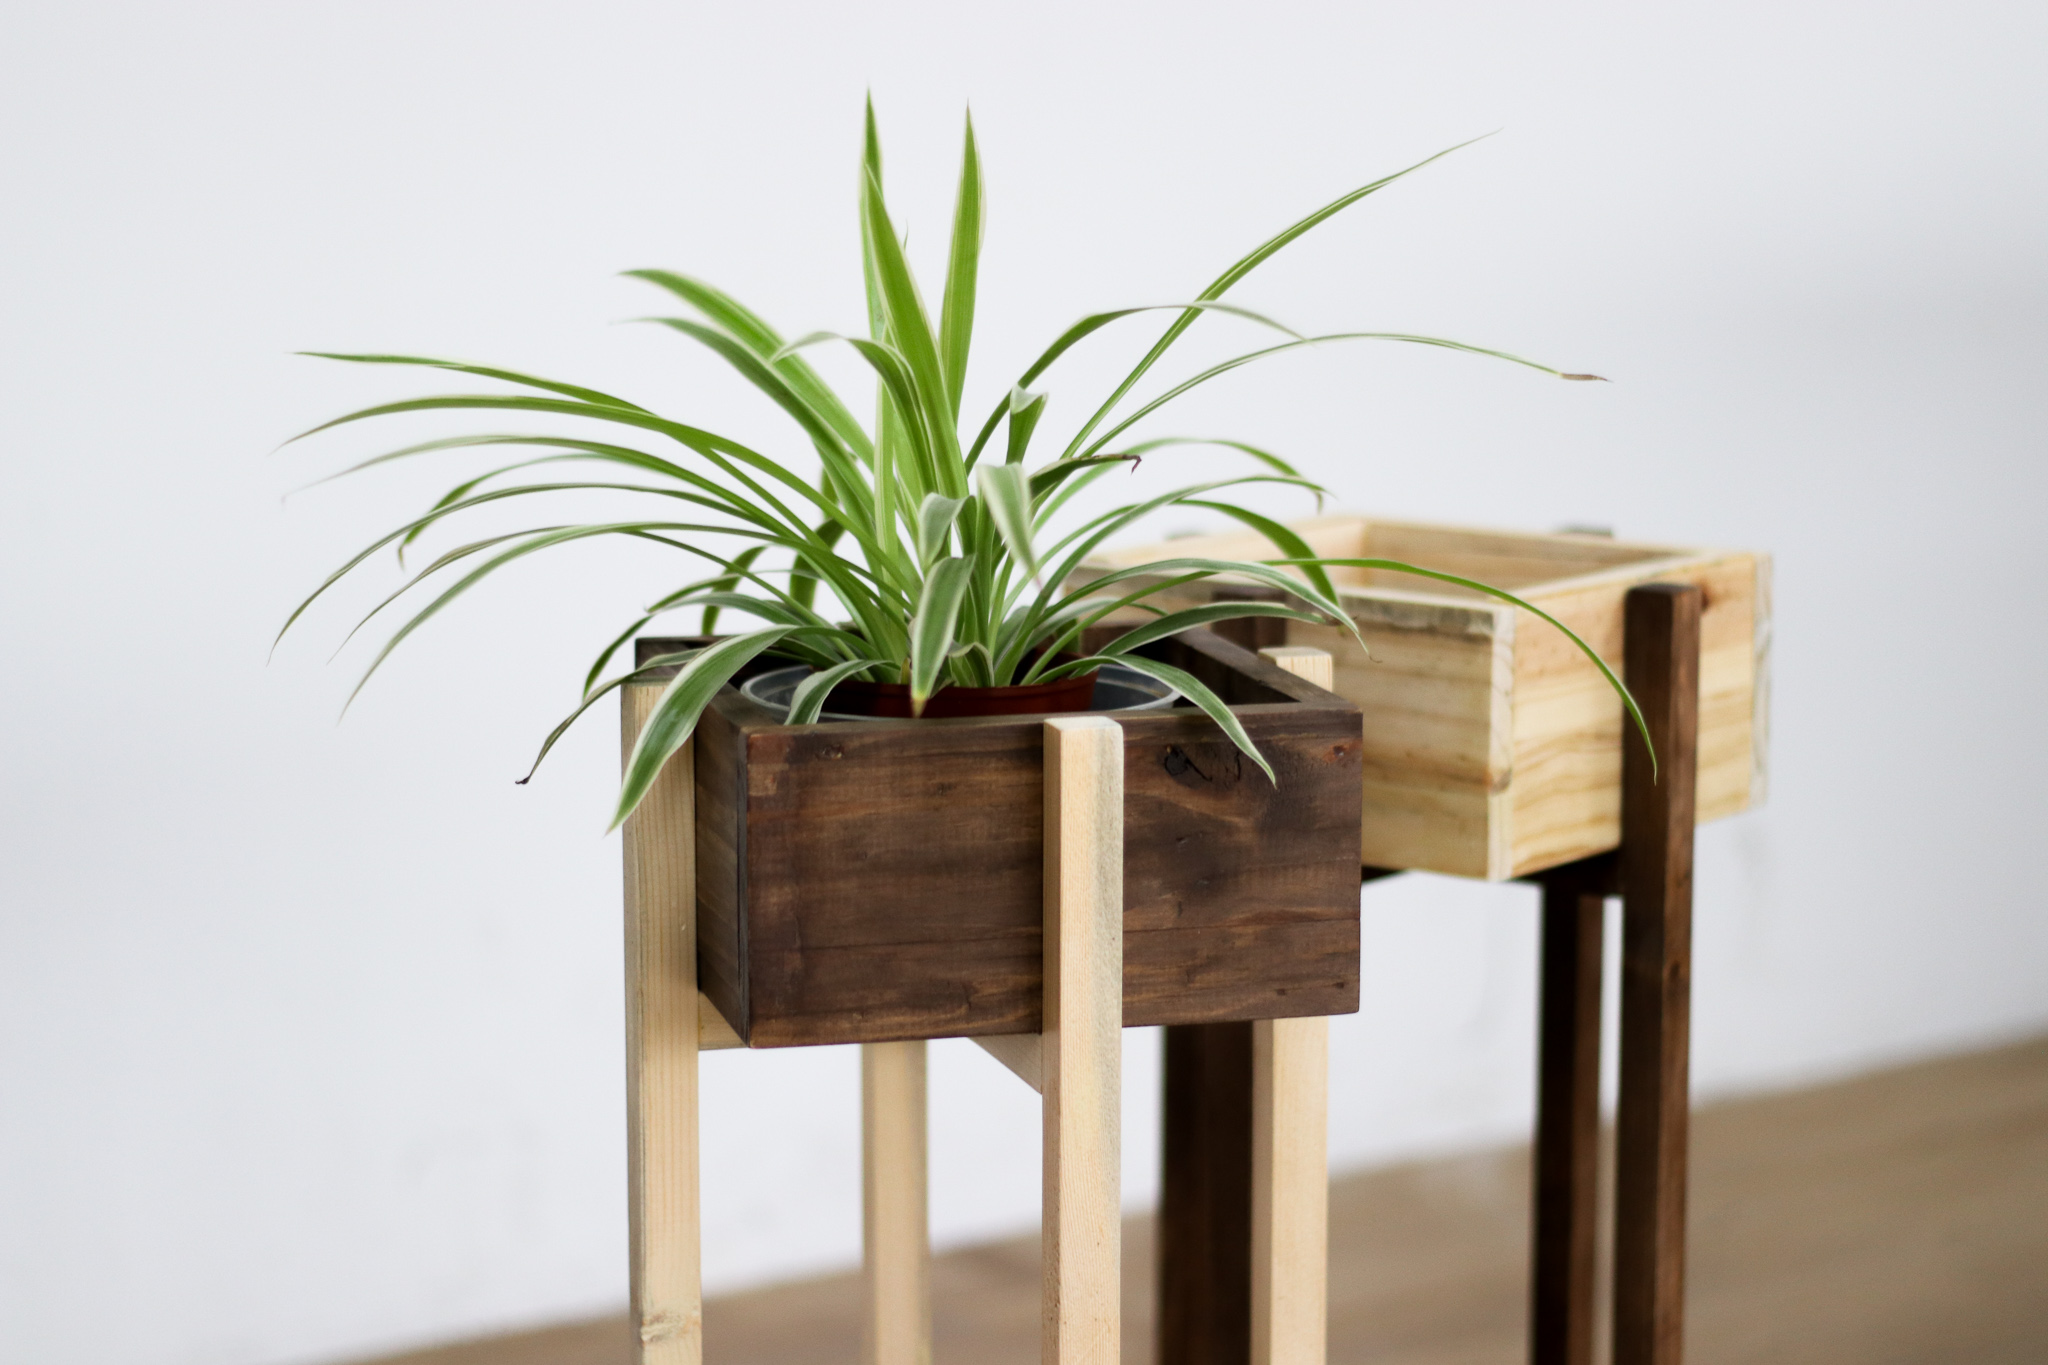 squarerooms triple eyelid studio sustainable recycled wood furniture plant pot